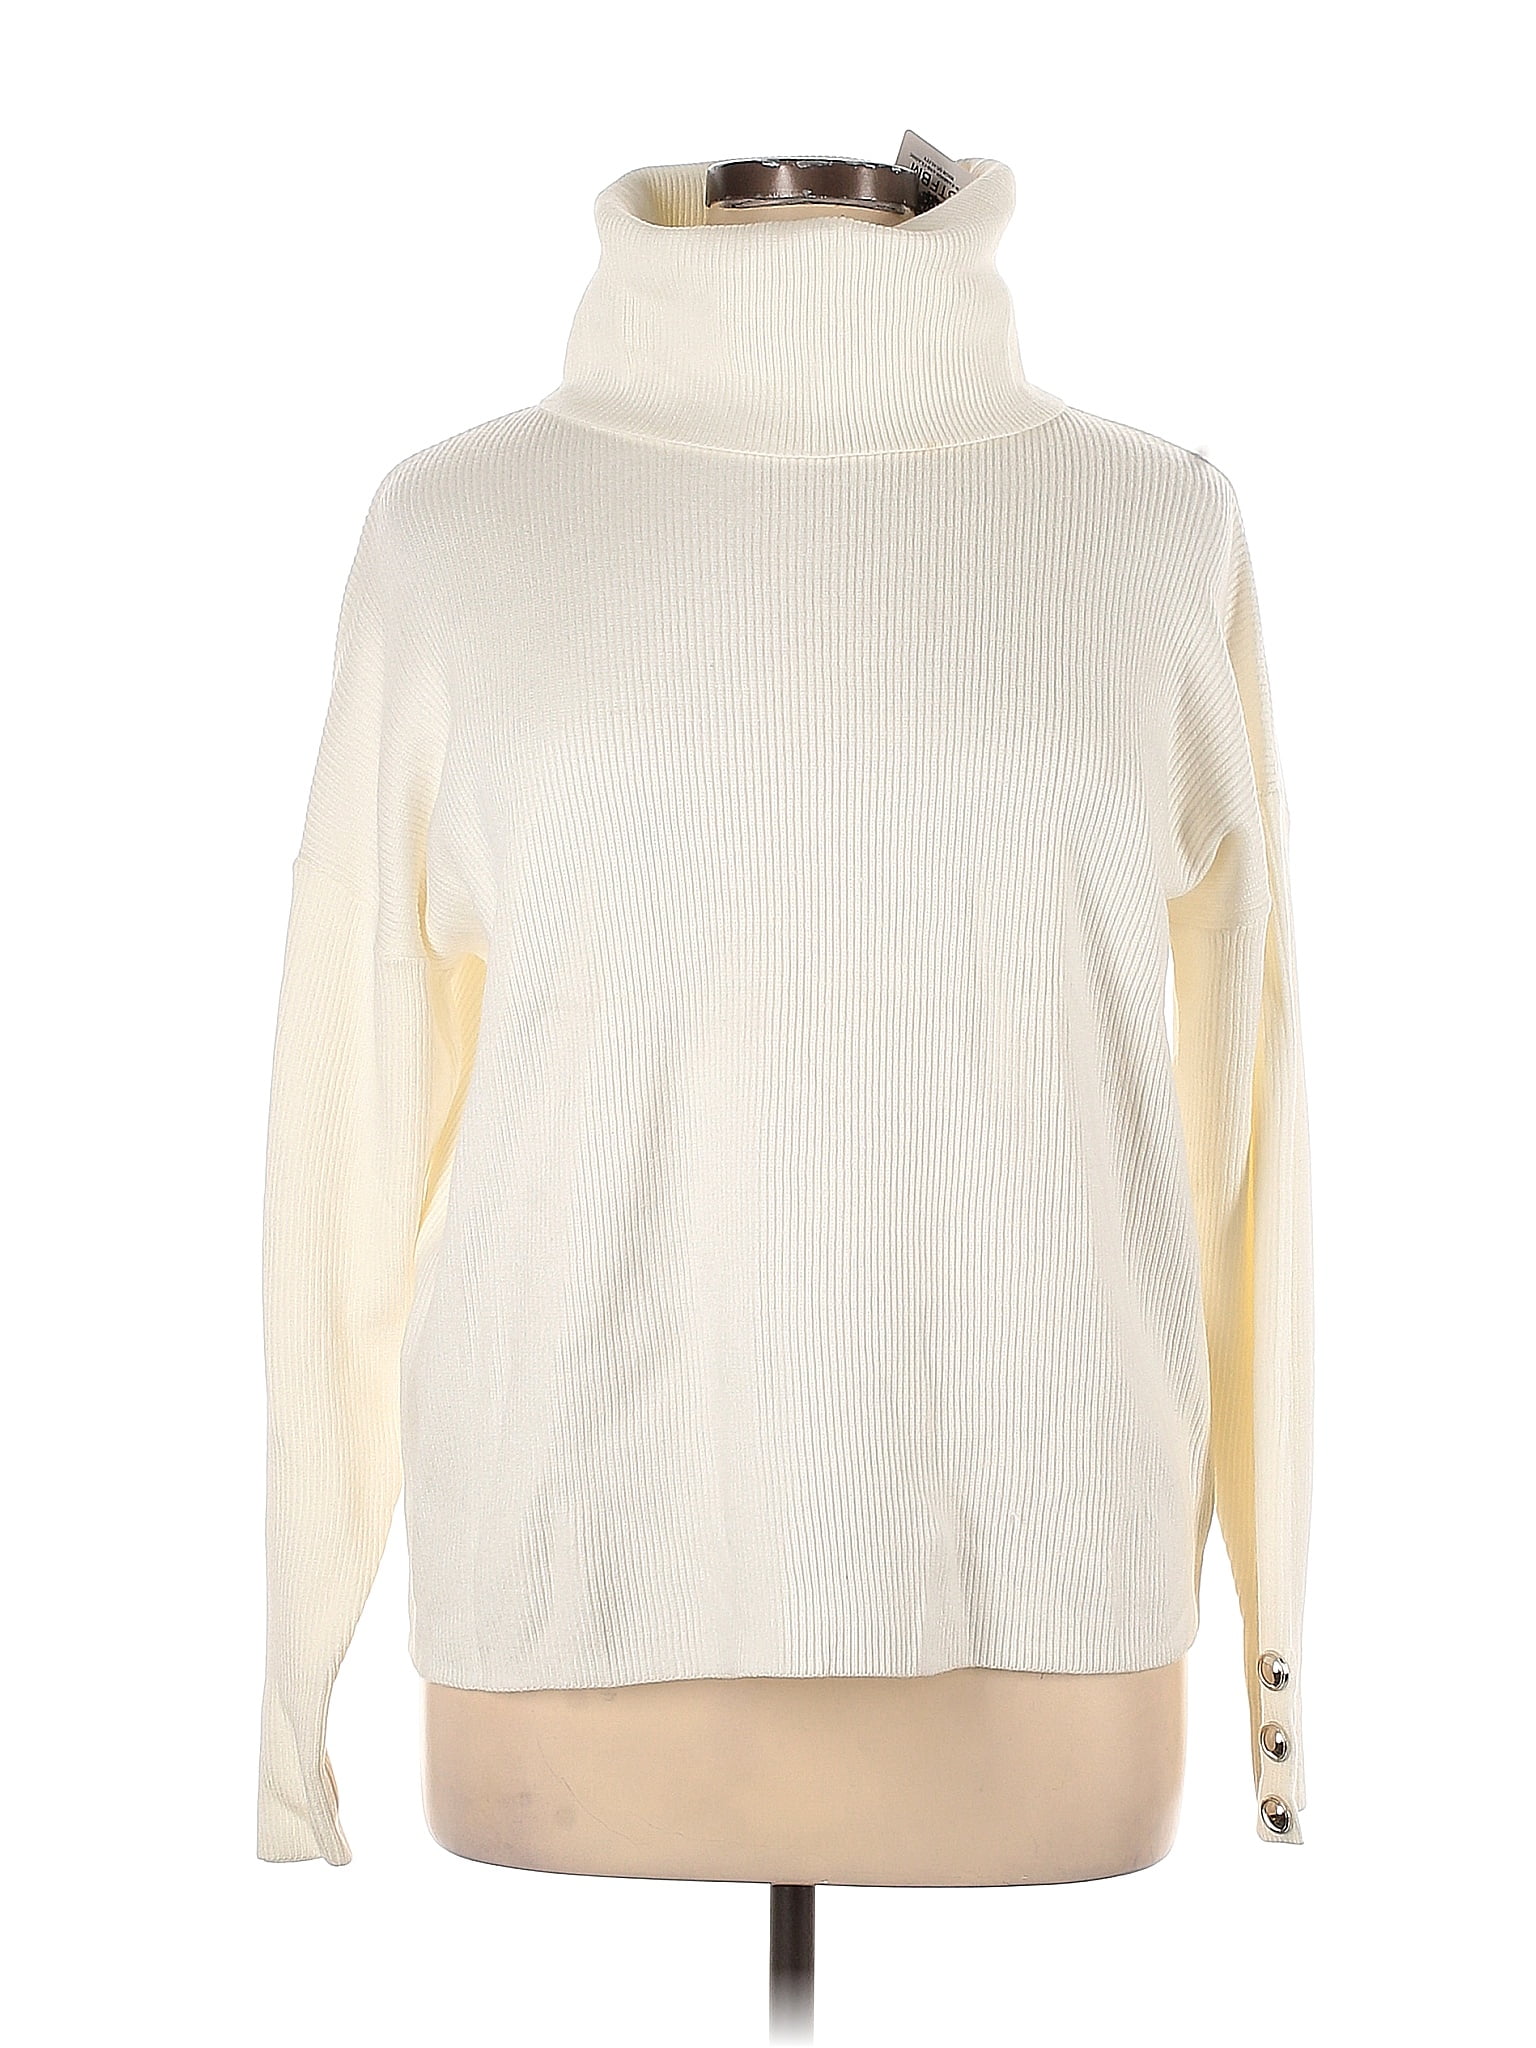 BTFBM Color Block Solid Ivory Turtleneck Sweater Size XL - 40% off ...